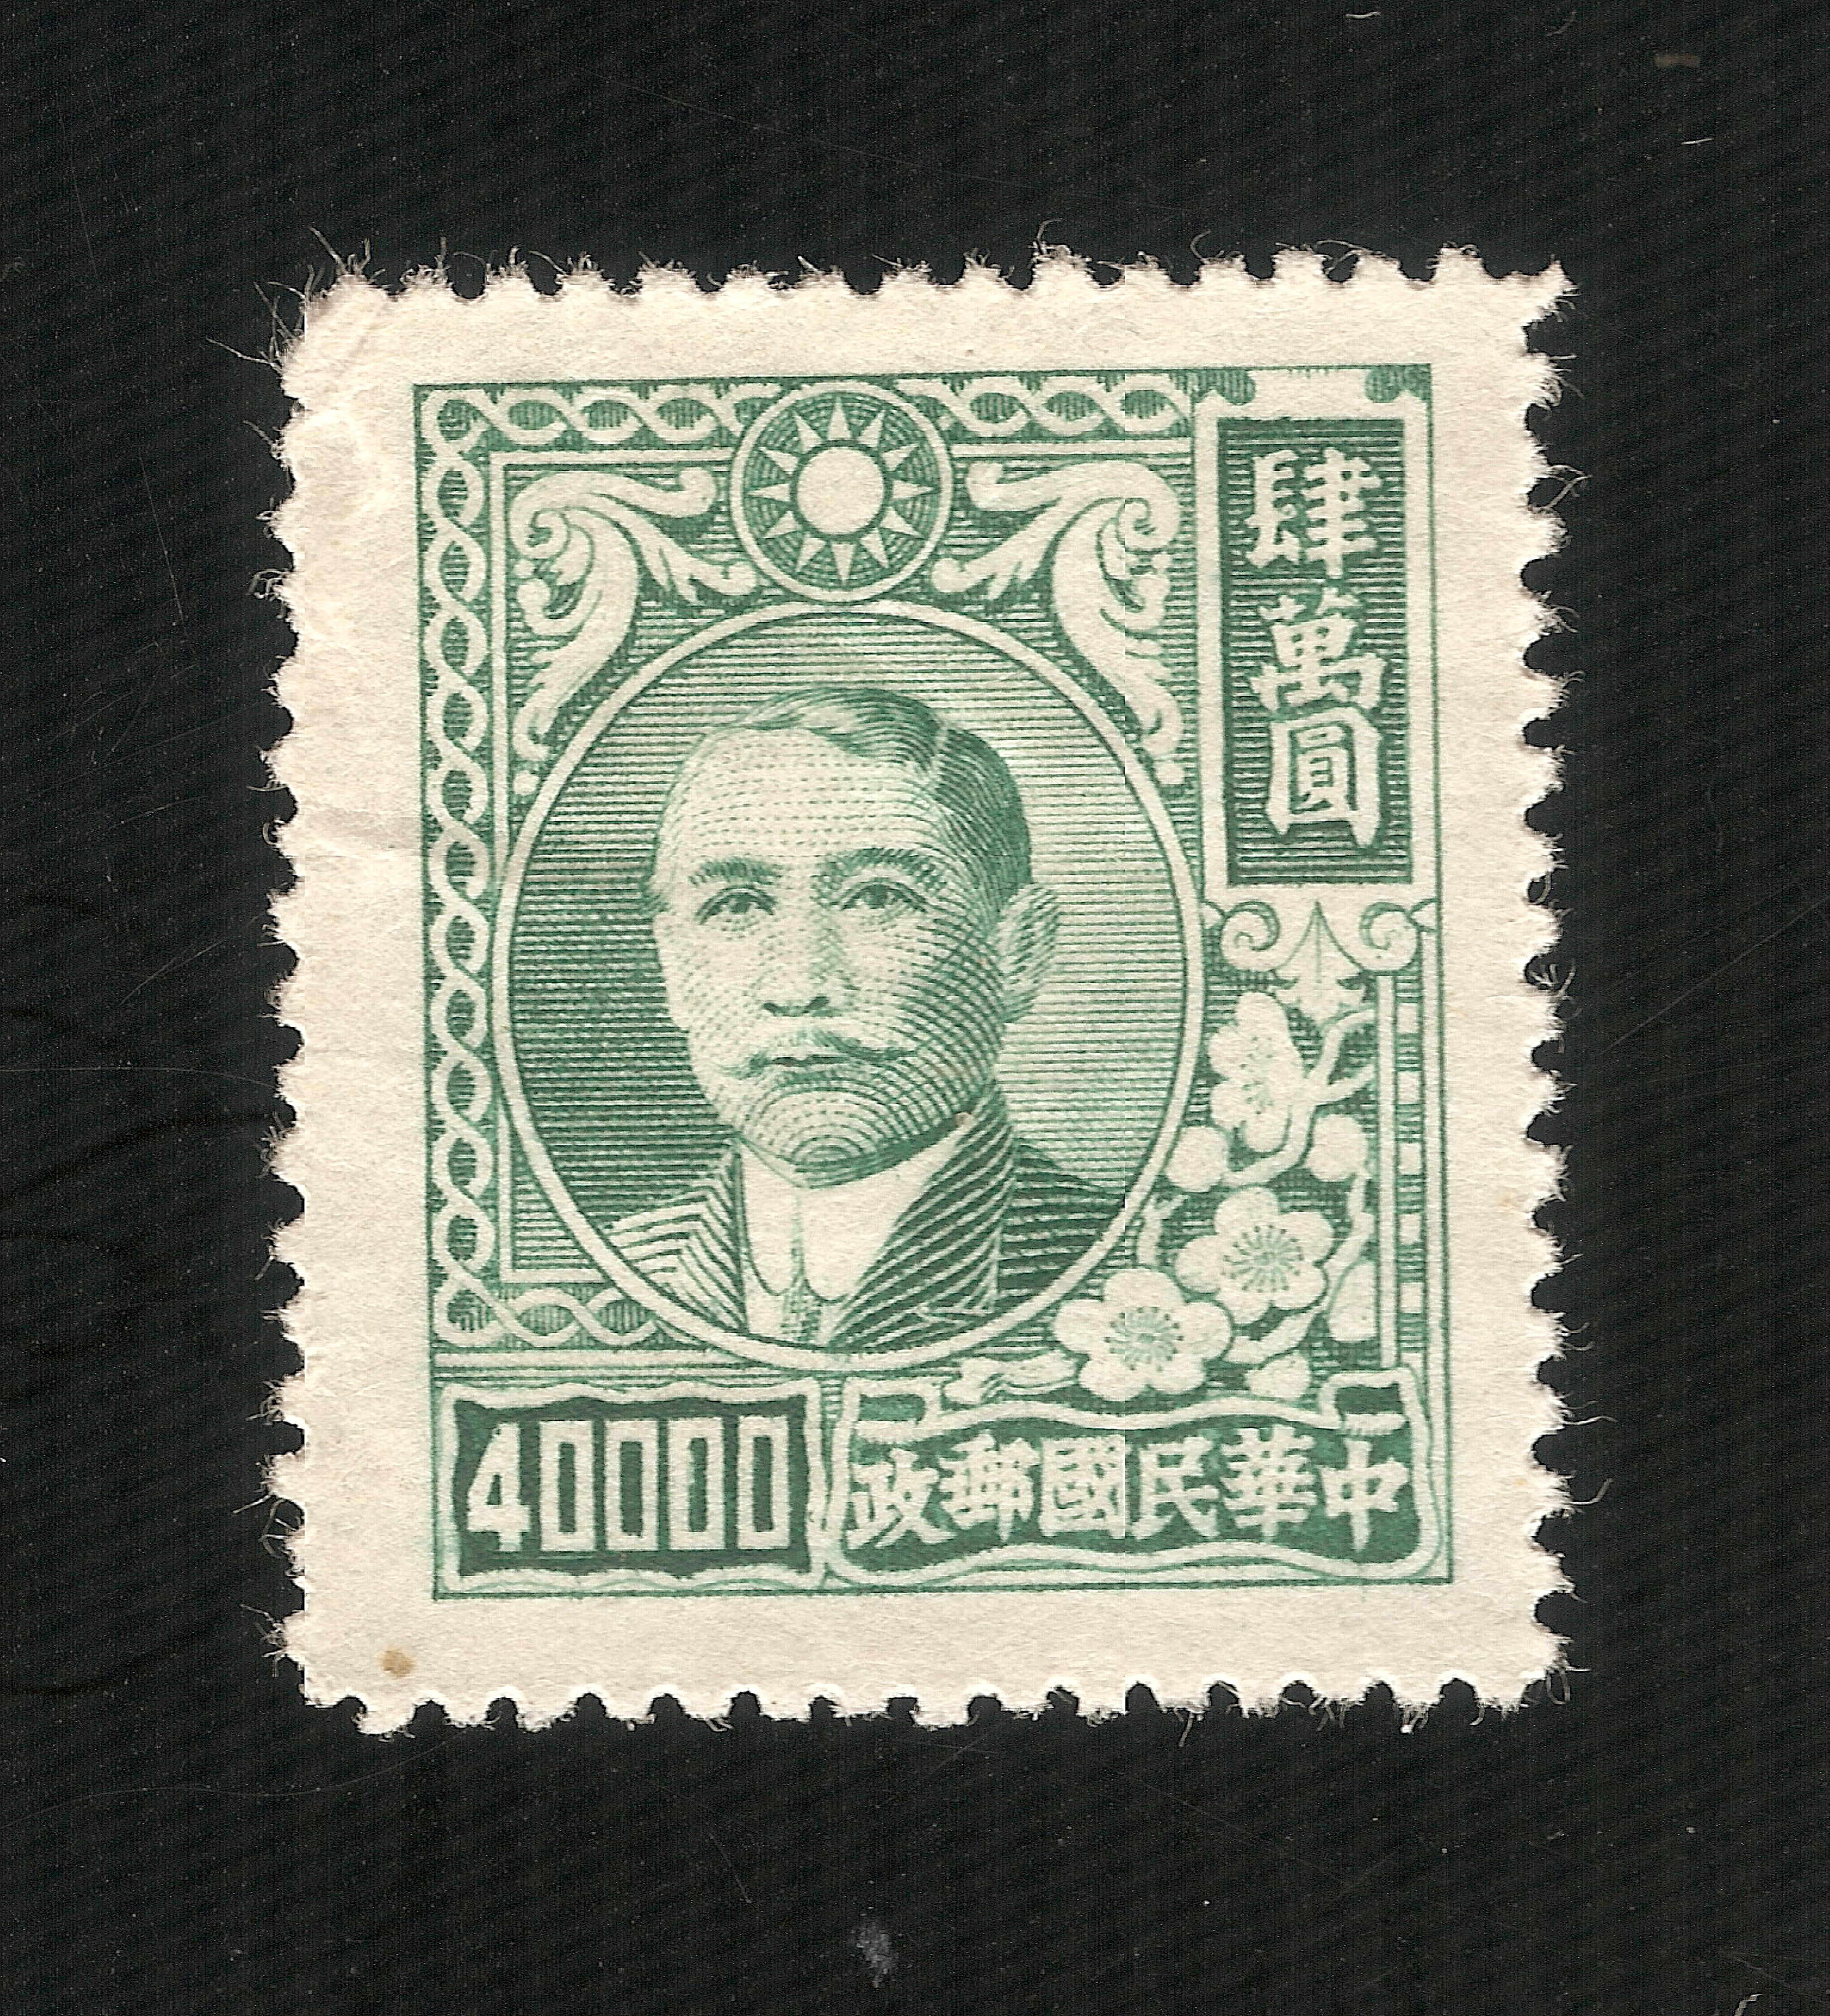 Chiny (Imperium) 1948 - Sun Yat-sen (40000 Dolar Chiński) 4608x5076